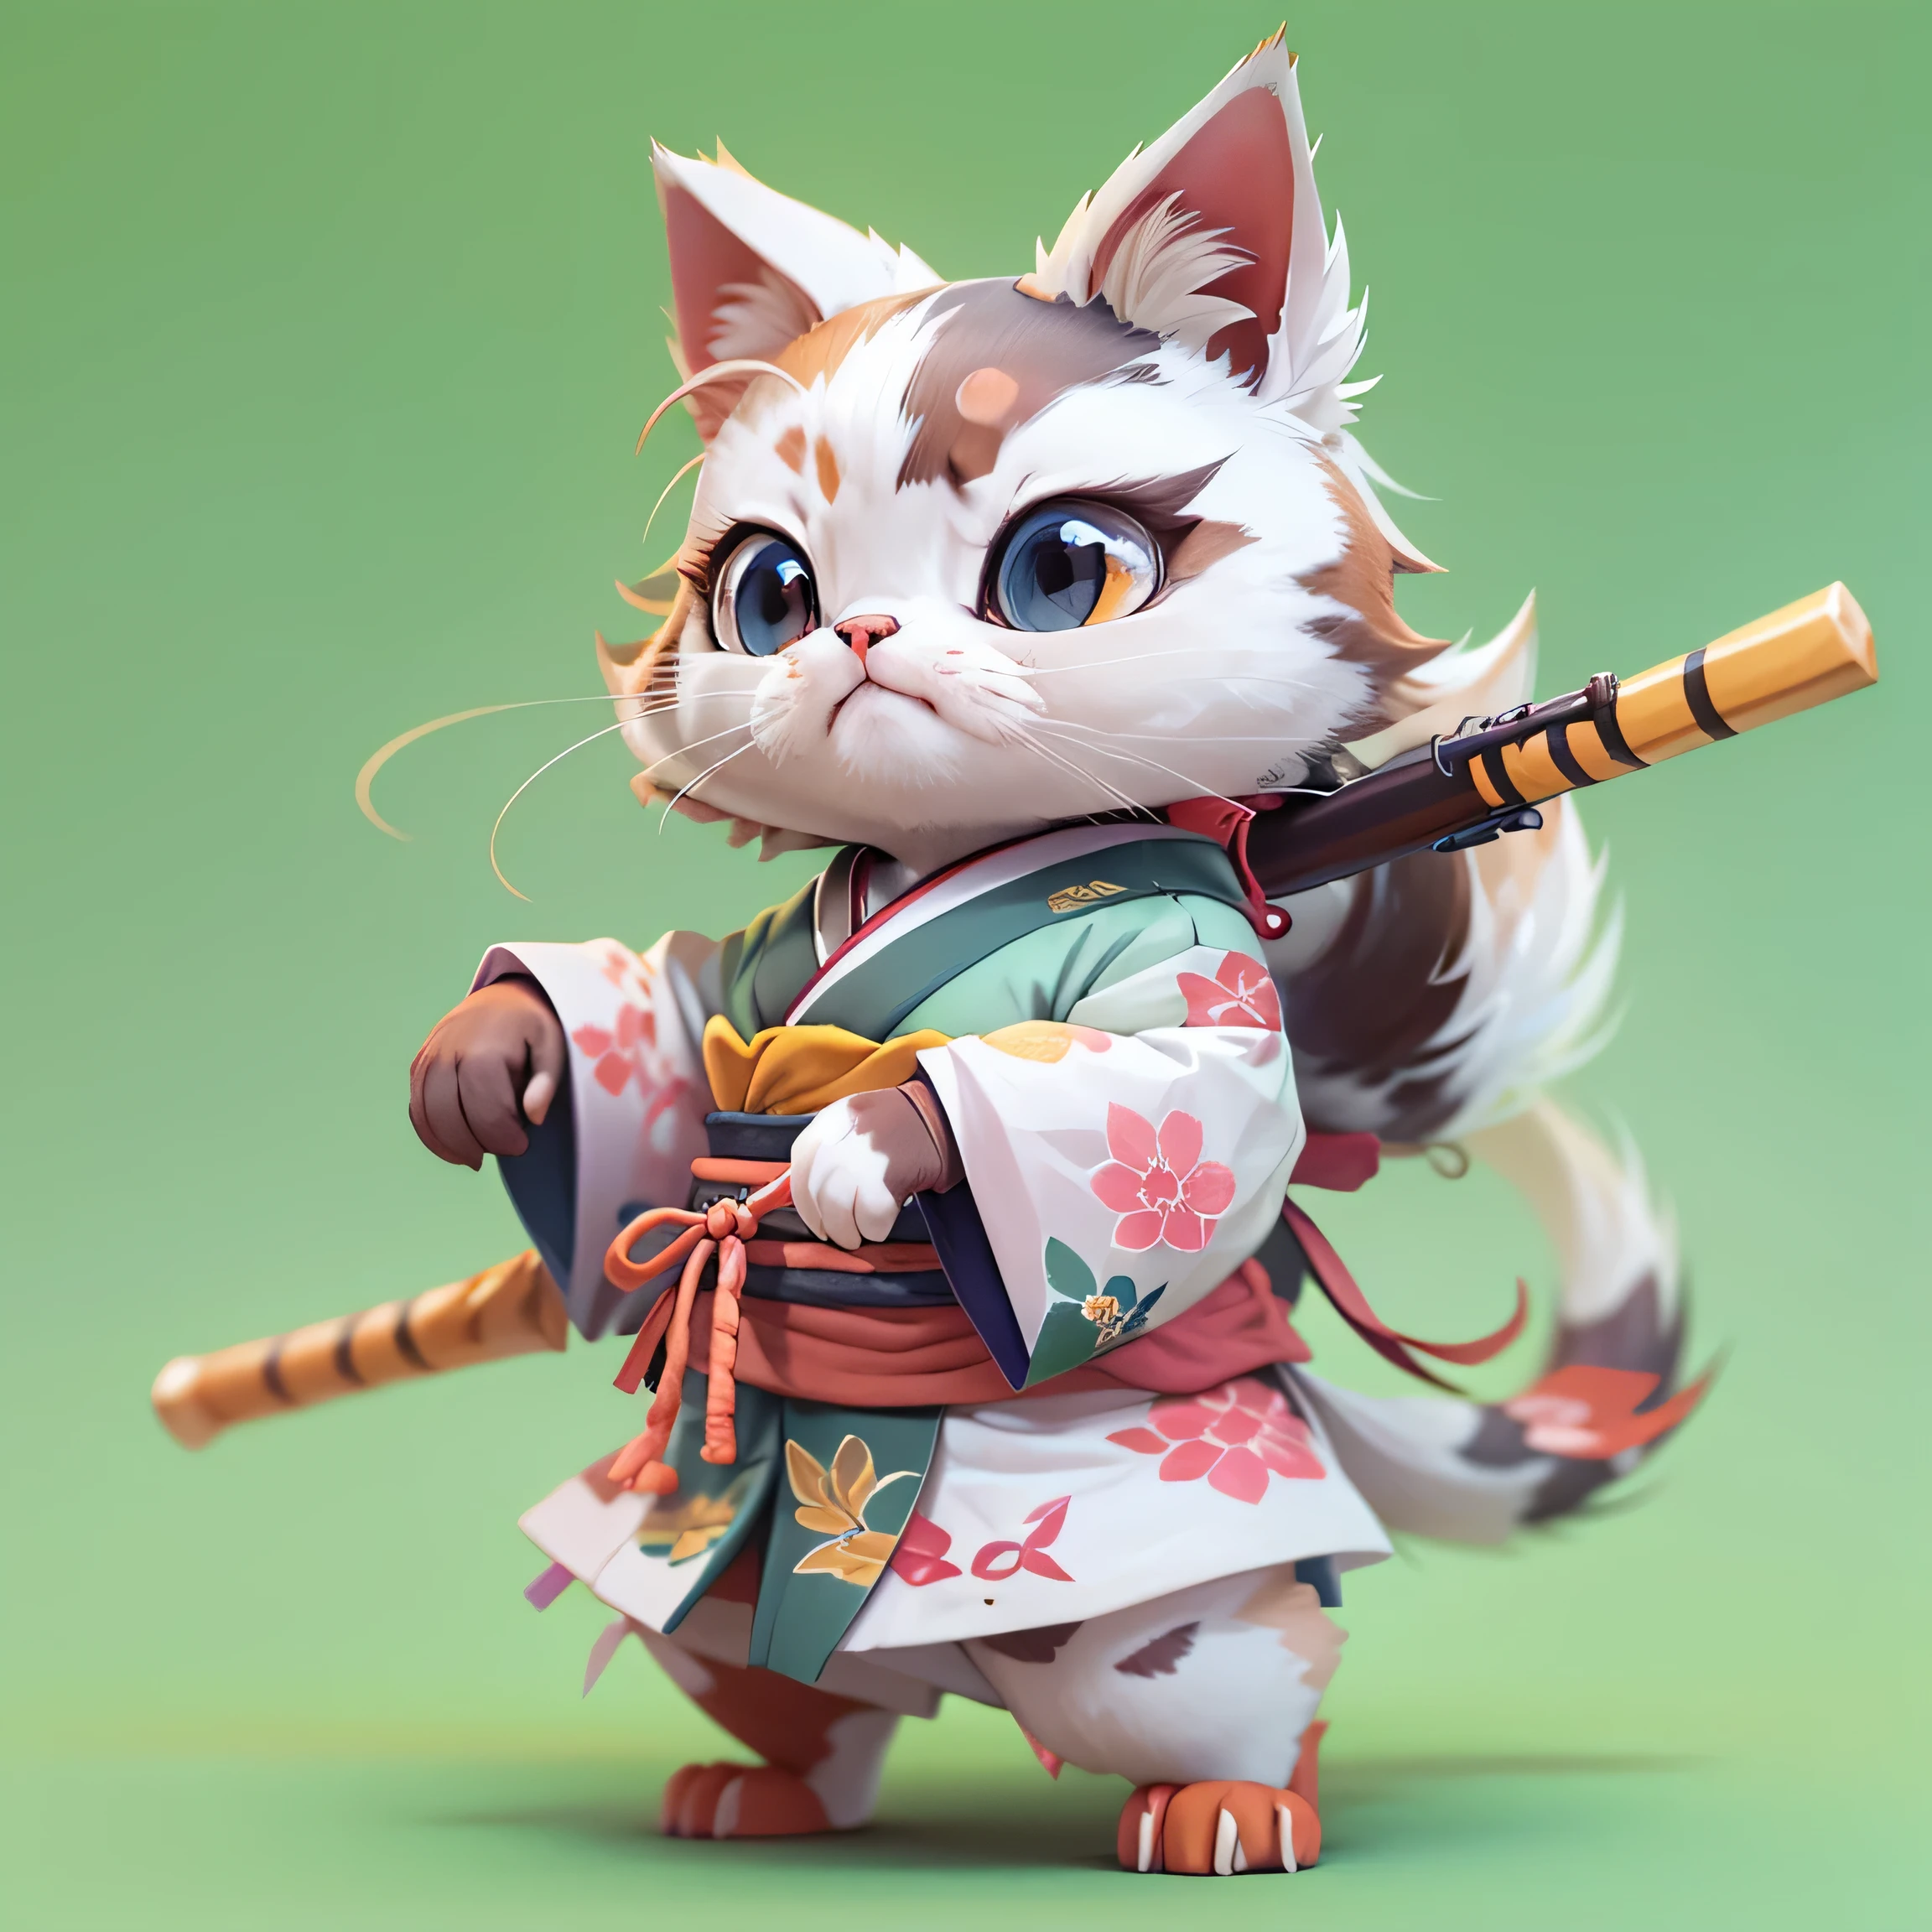 Hay un gato que lleva un kimono., gato samurái, ninja gato antropomorfo, adorable pintura digital, inspirado en Miao Fu, Linda representación 3d, Modelo 3D de una mascota japonesa., Arte digital lindo y detallado., gato animado, lindo arte digital, cgi japonés, gata antropomorfa, Imágenes visuales de anime de gatos lindos